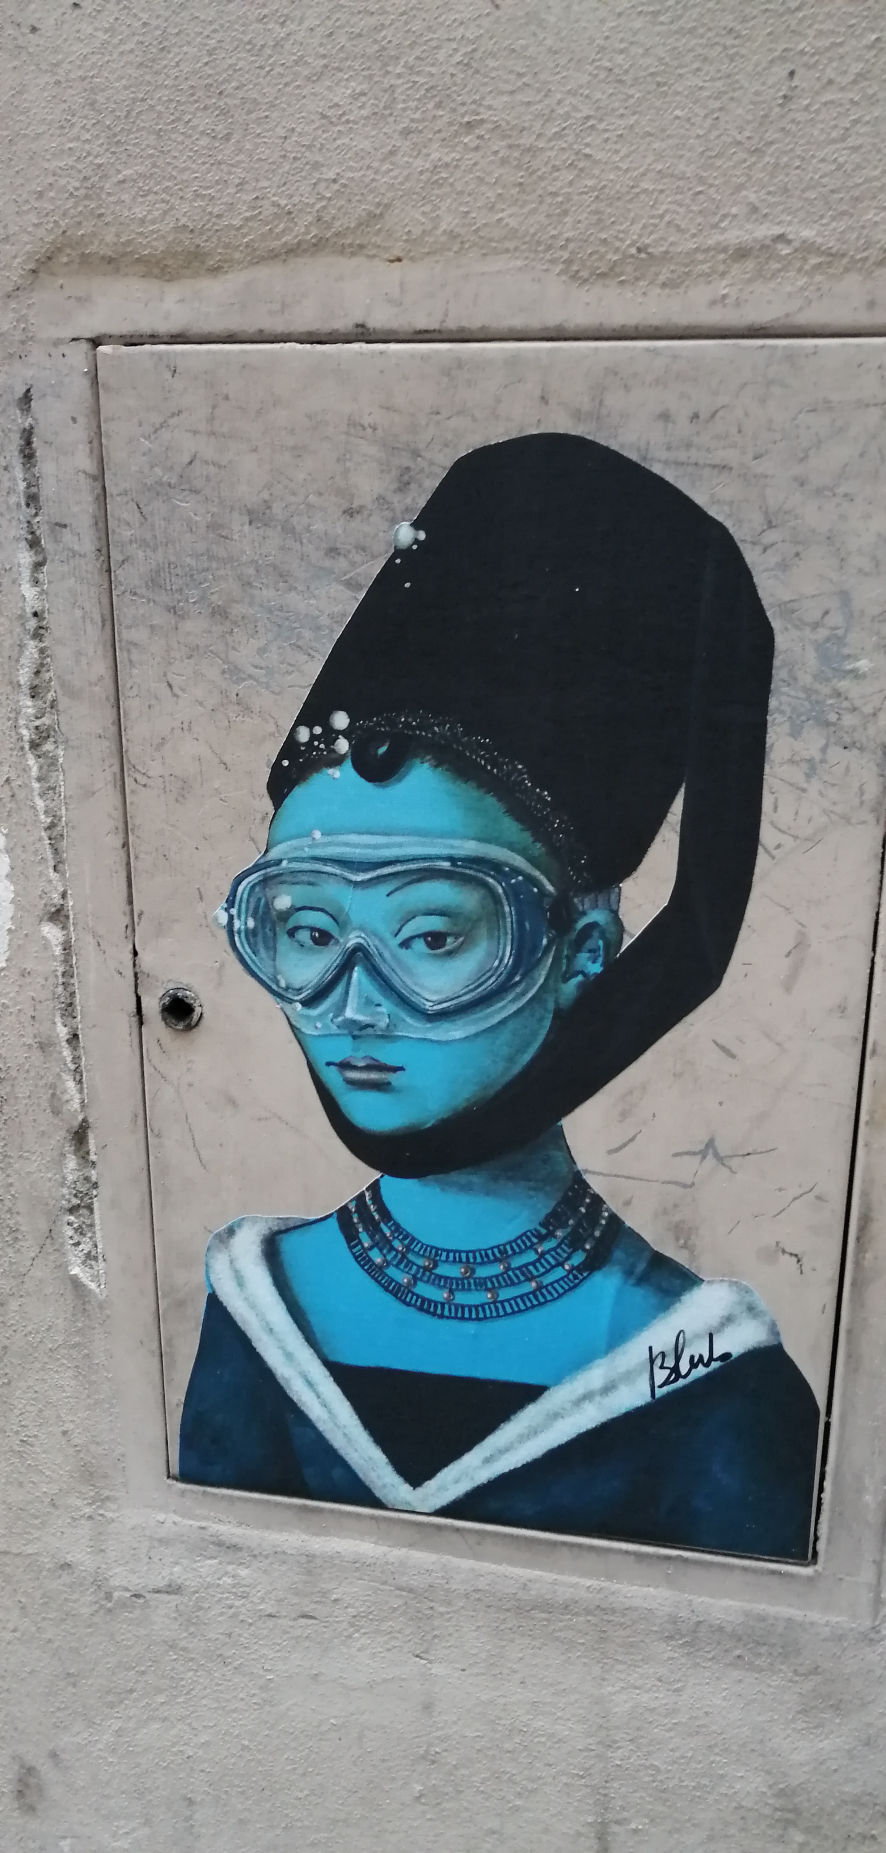 ITALY / Lucca / Street Art